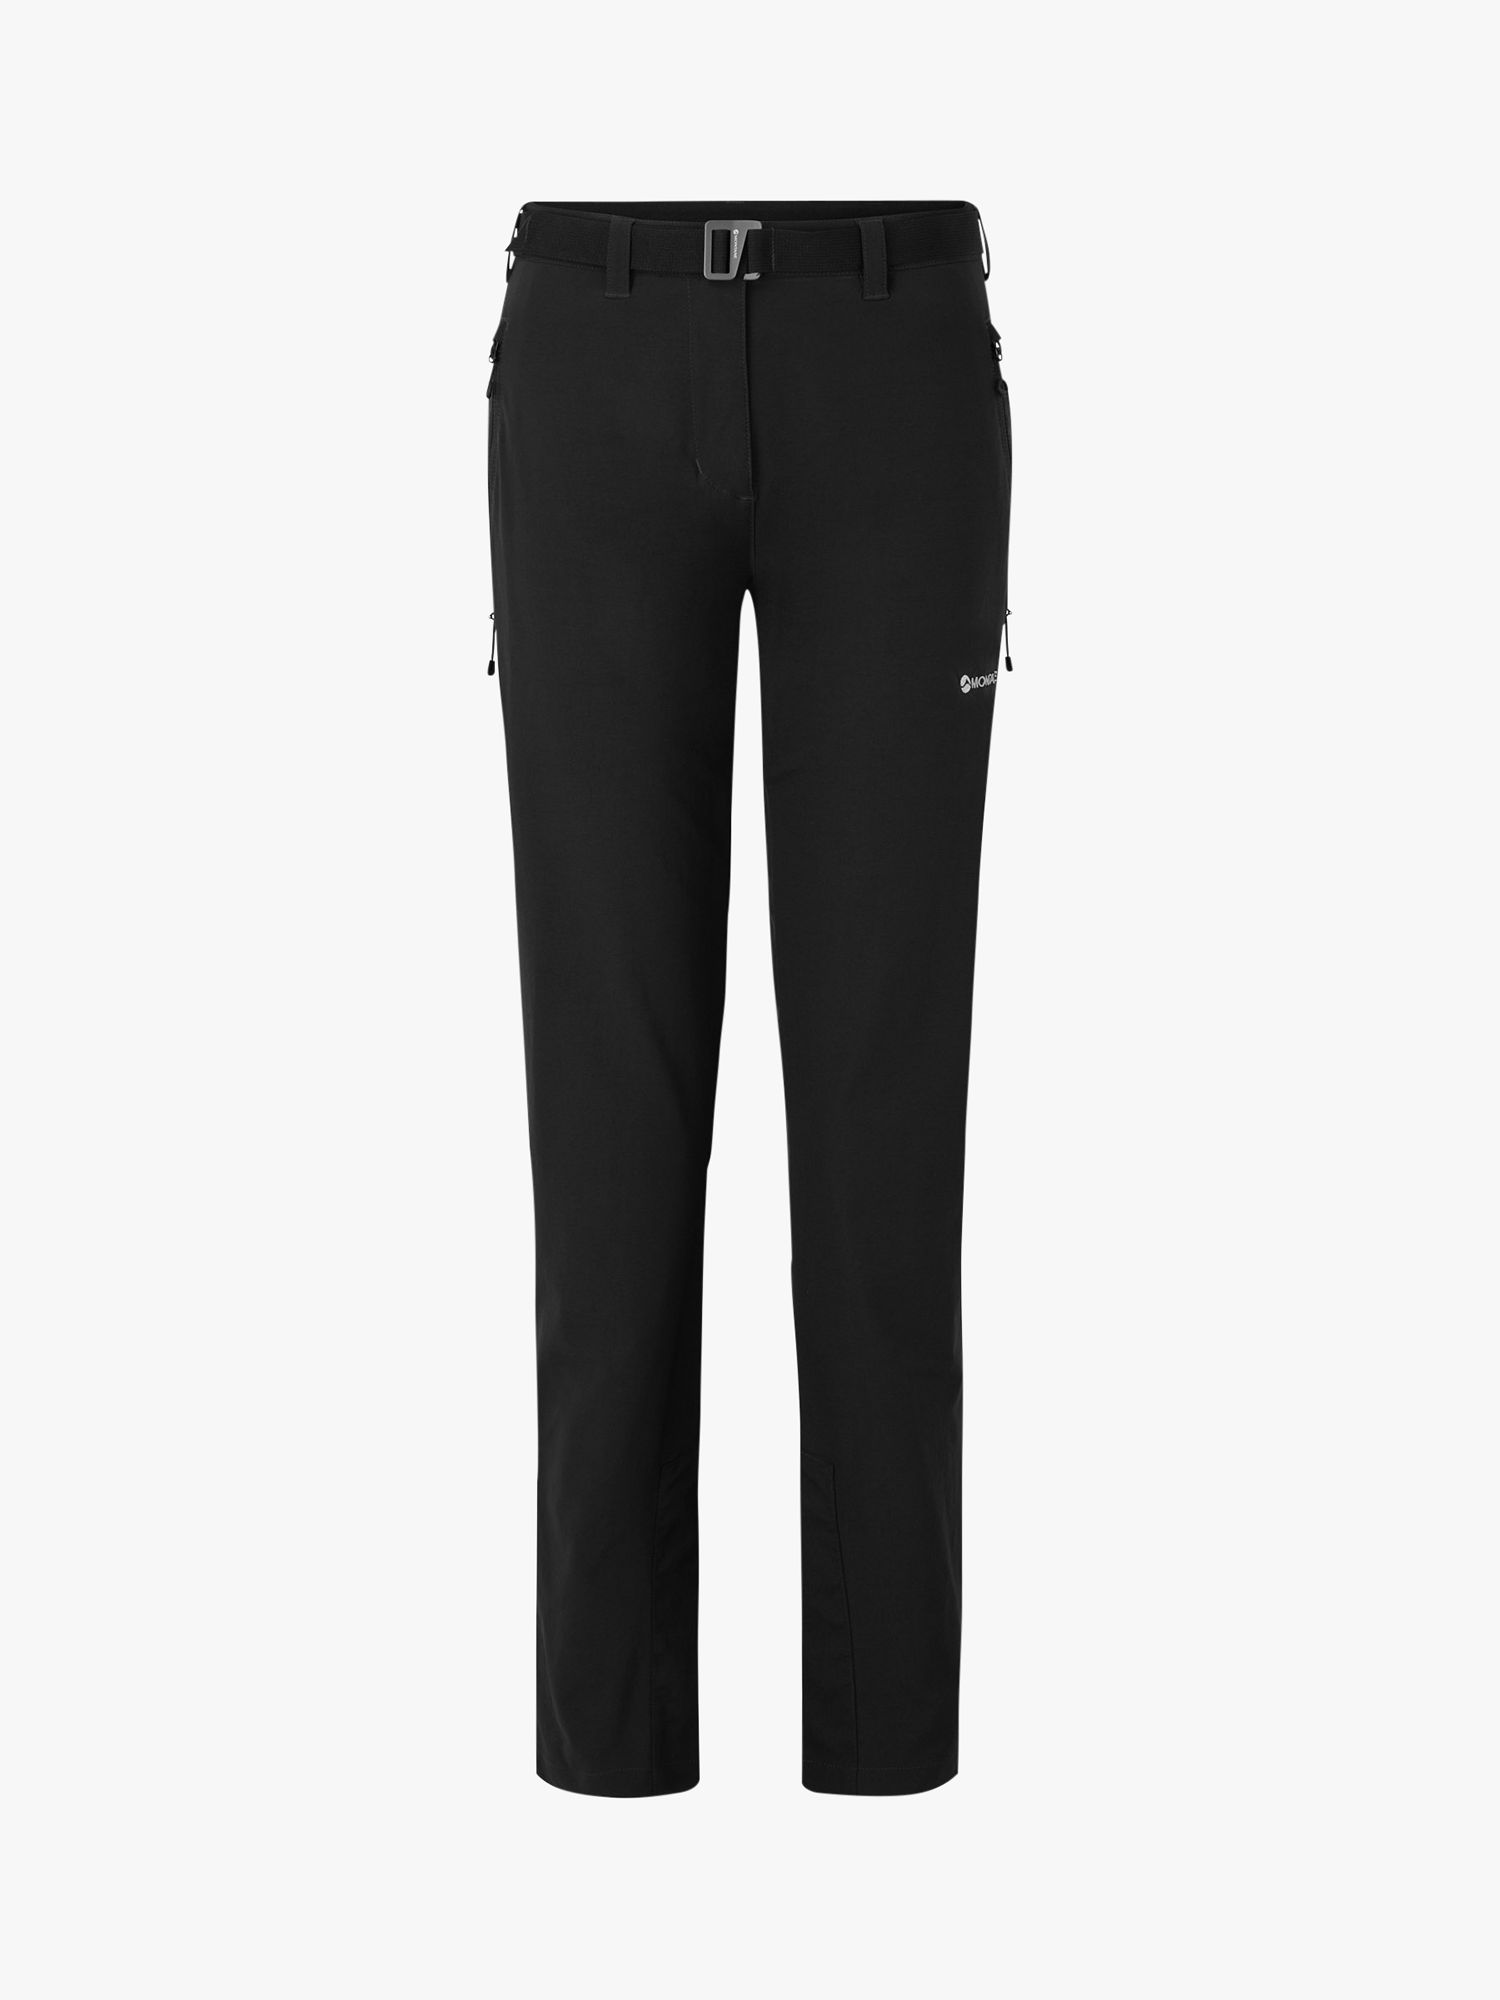 Montane Terra Stretch Trousers, Black, 6